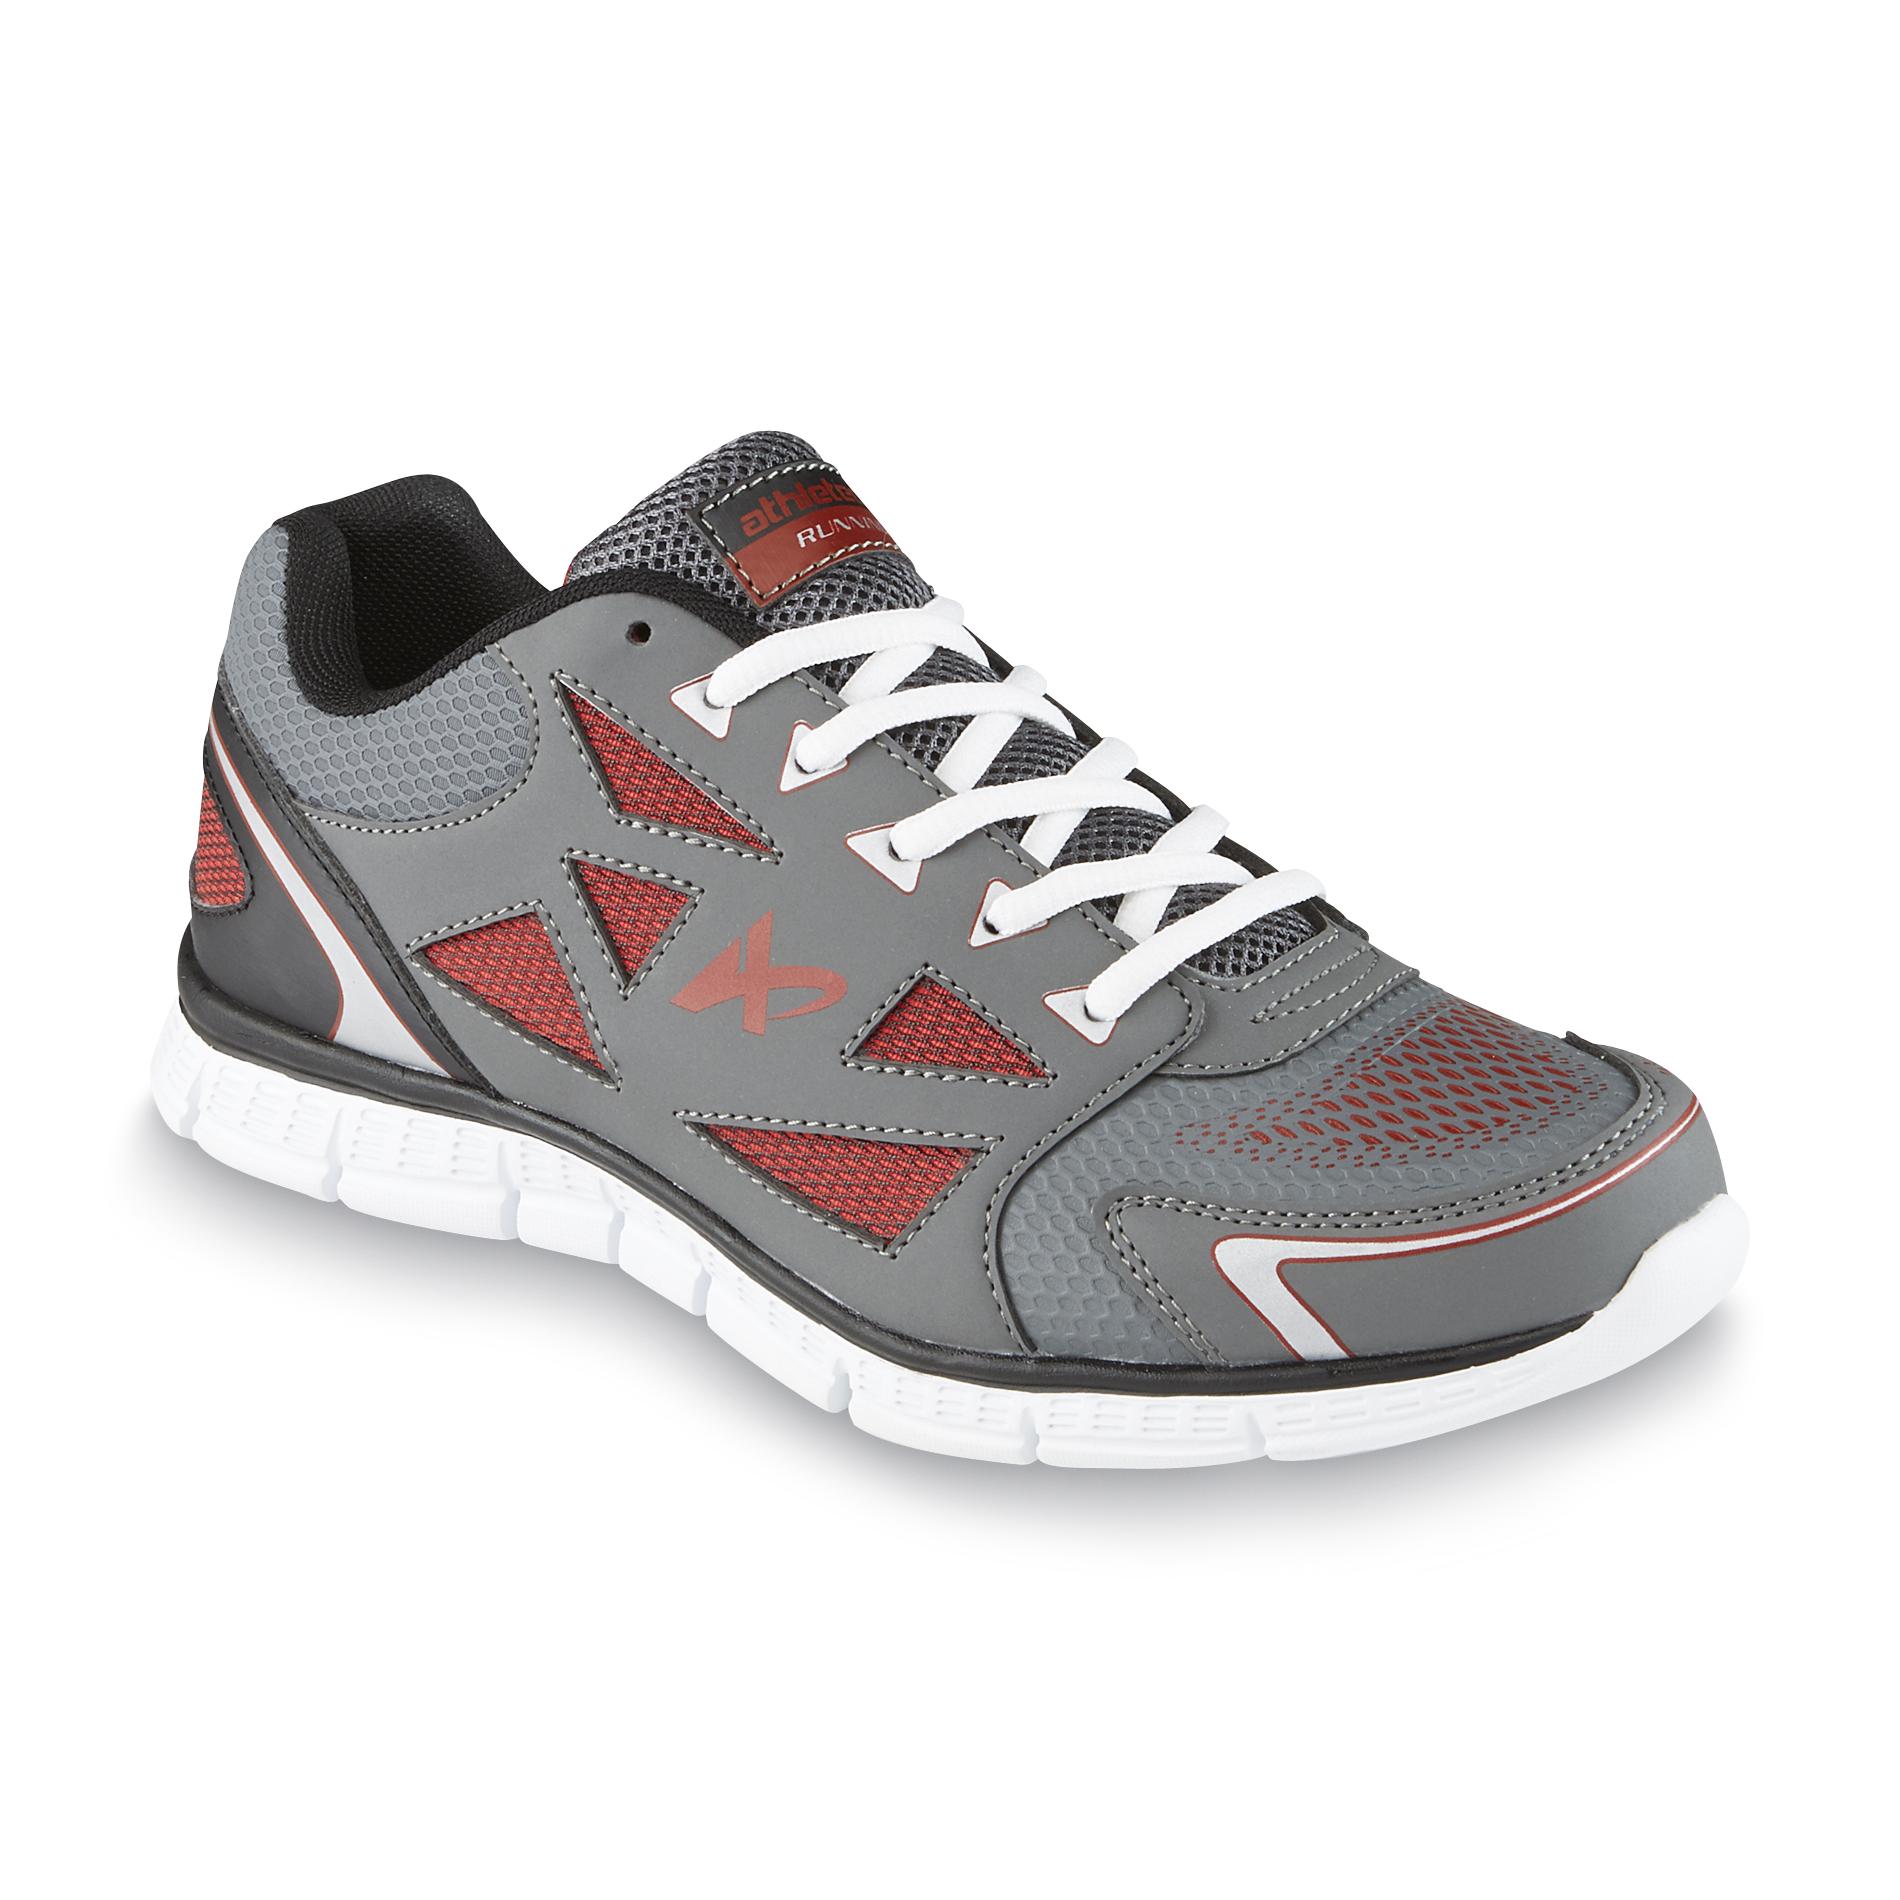 Athletech Men's Sprint Gray/Red/Black Running Shoe